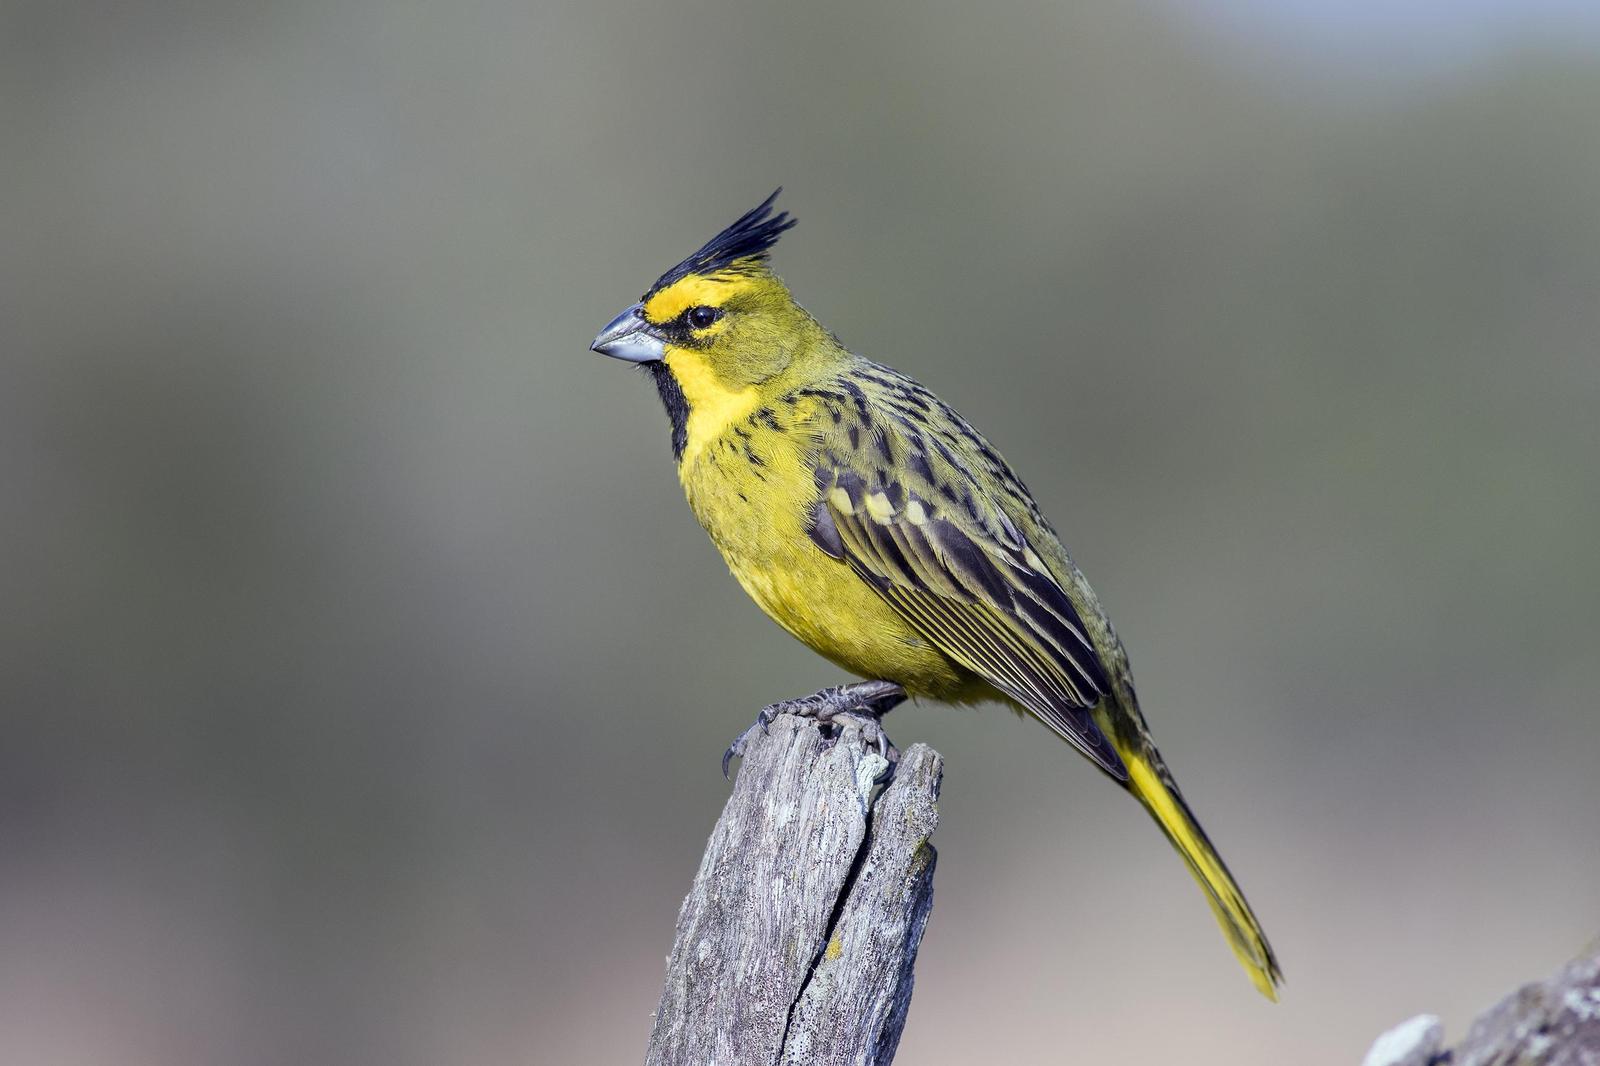 Yellow Cardinal Photo by Martin Eayrs